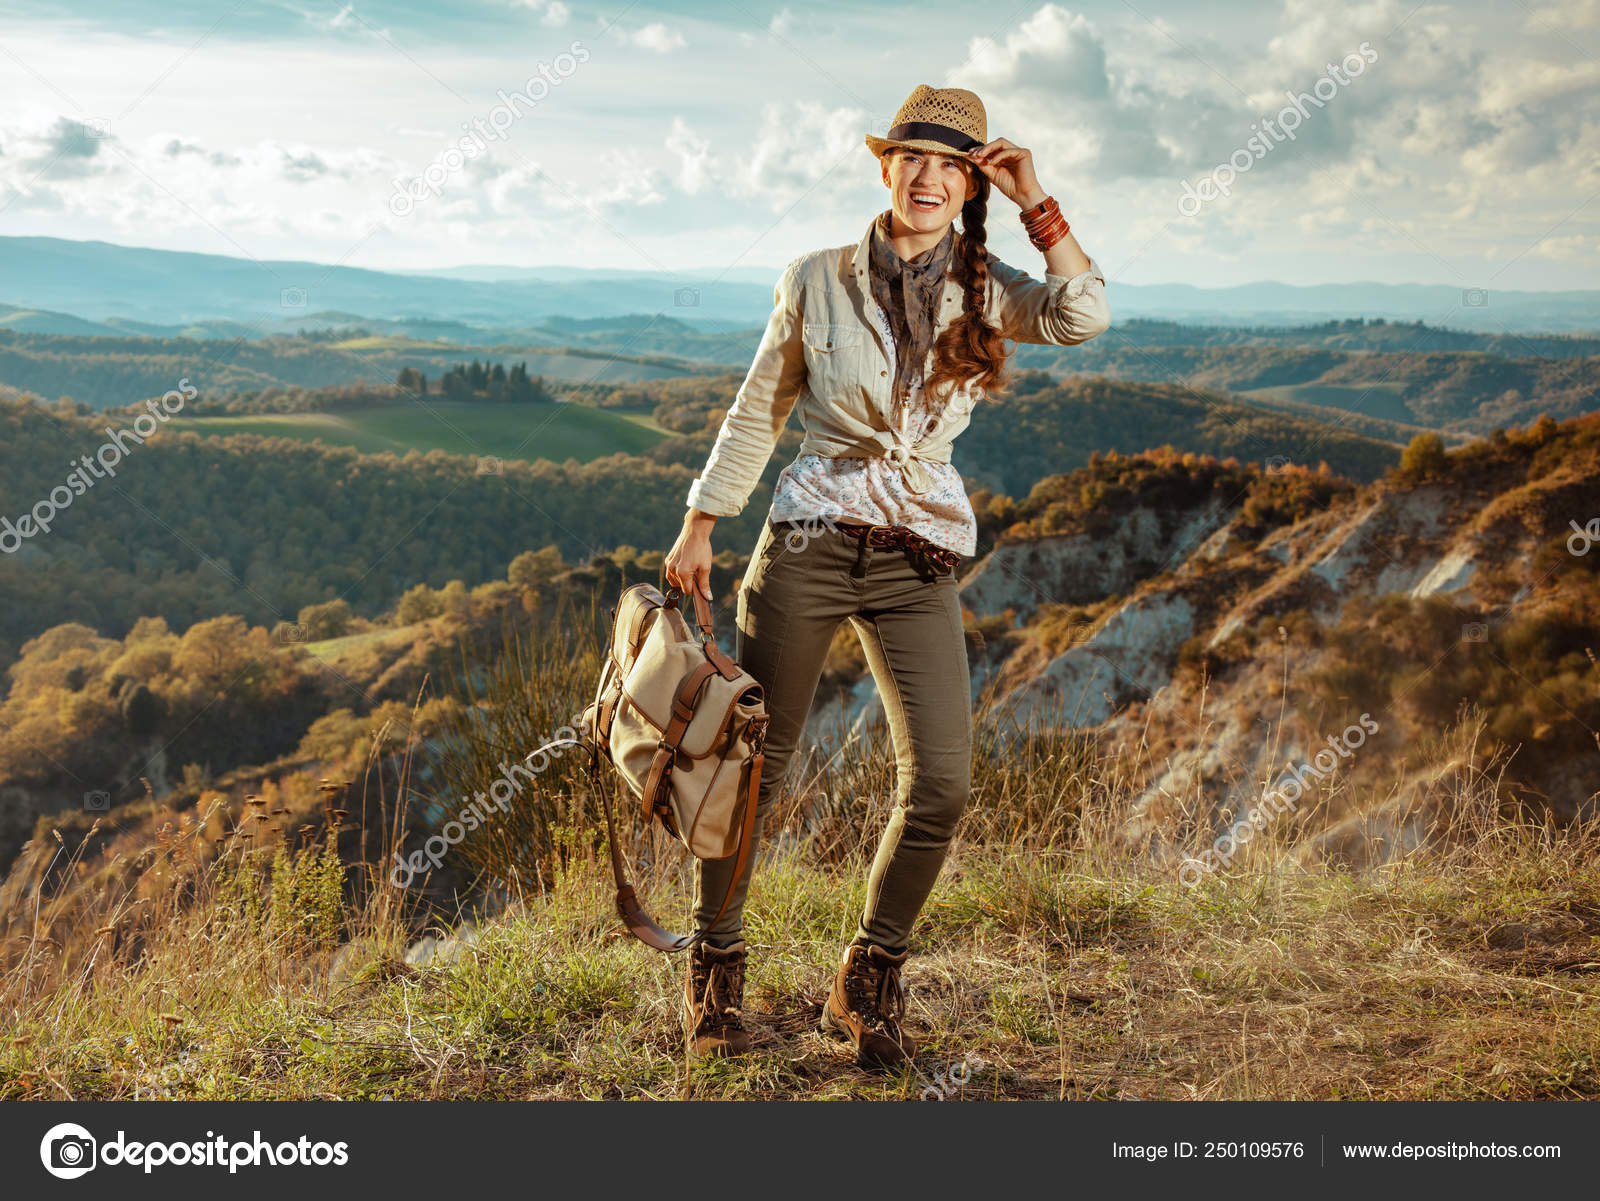 https://st4.depositphotos.com/1377214/25010/i/1600/depositphotos_250109576-stock-photo-woman-hiker-on-summer-hiking.jpg